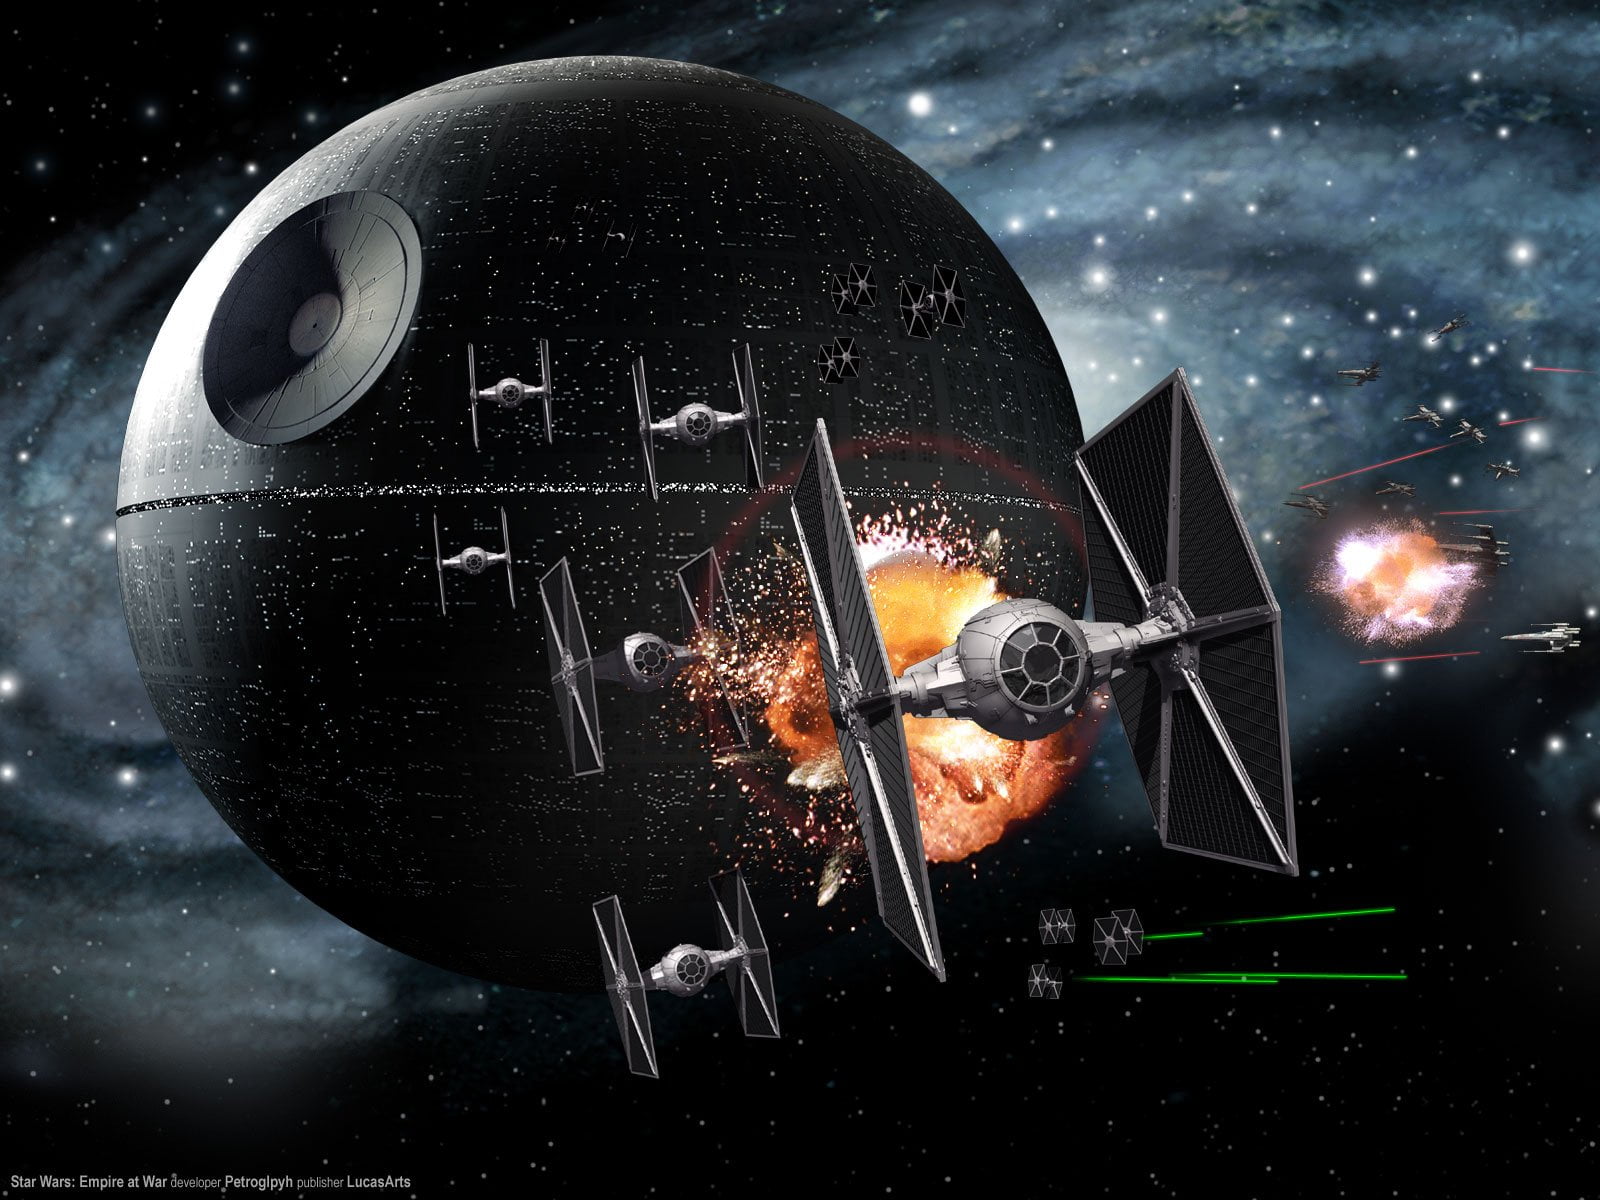 black satellite and Death Star illustration, Star Wars, Star Wars: Empire at War